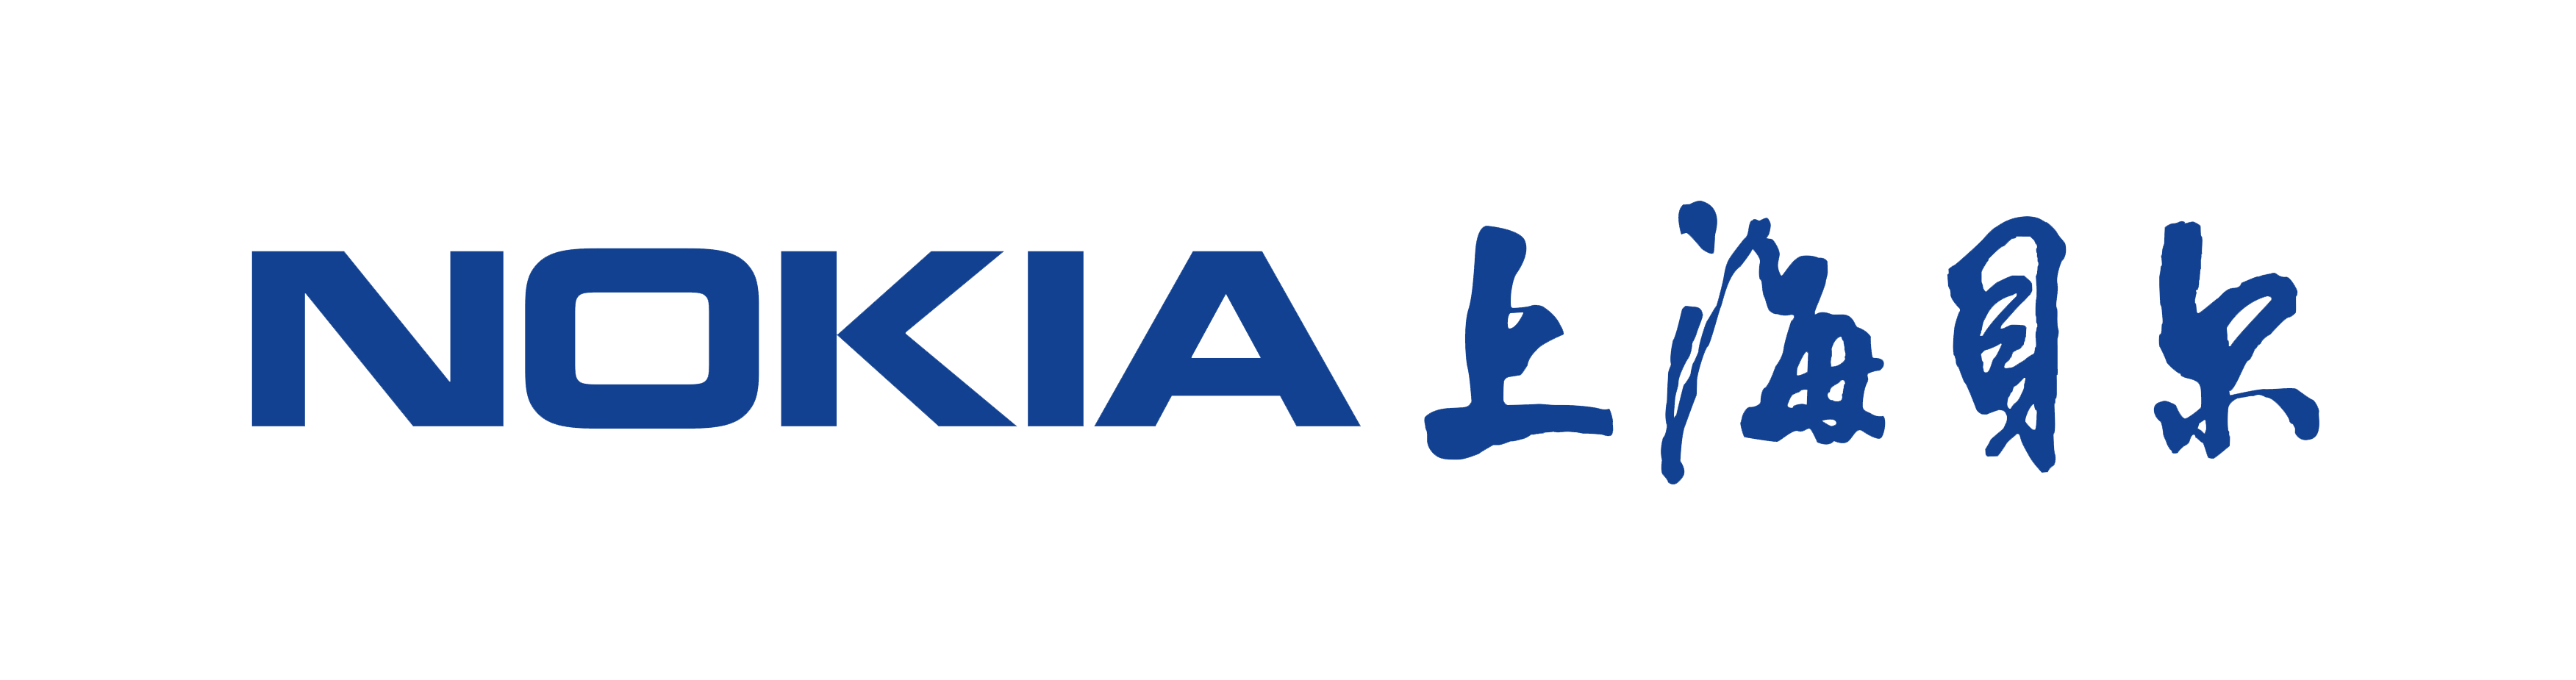 Nokia Shanghai Bell Co., Ltd.